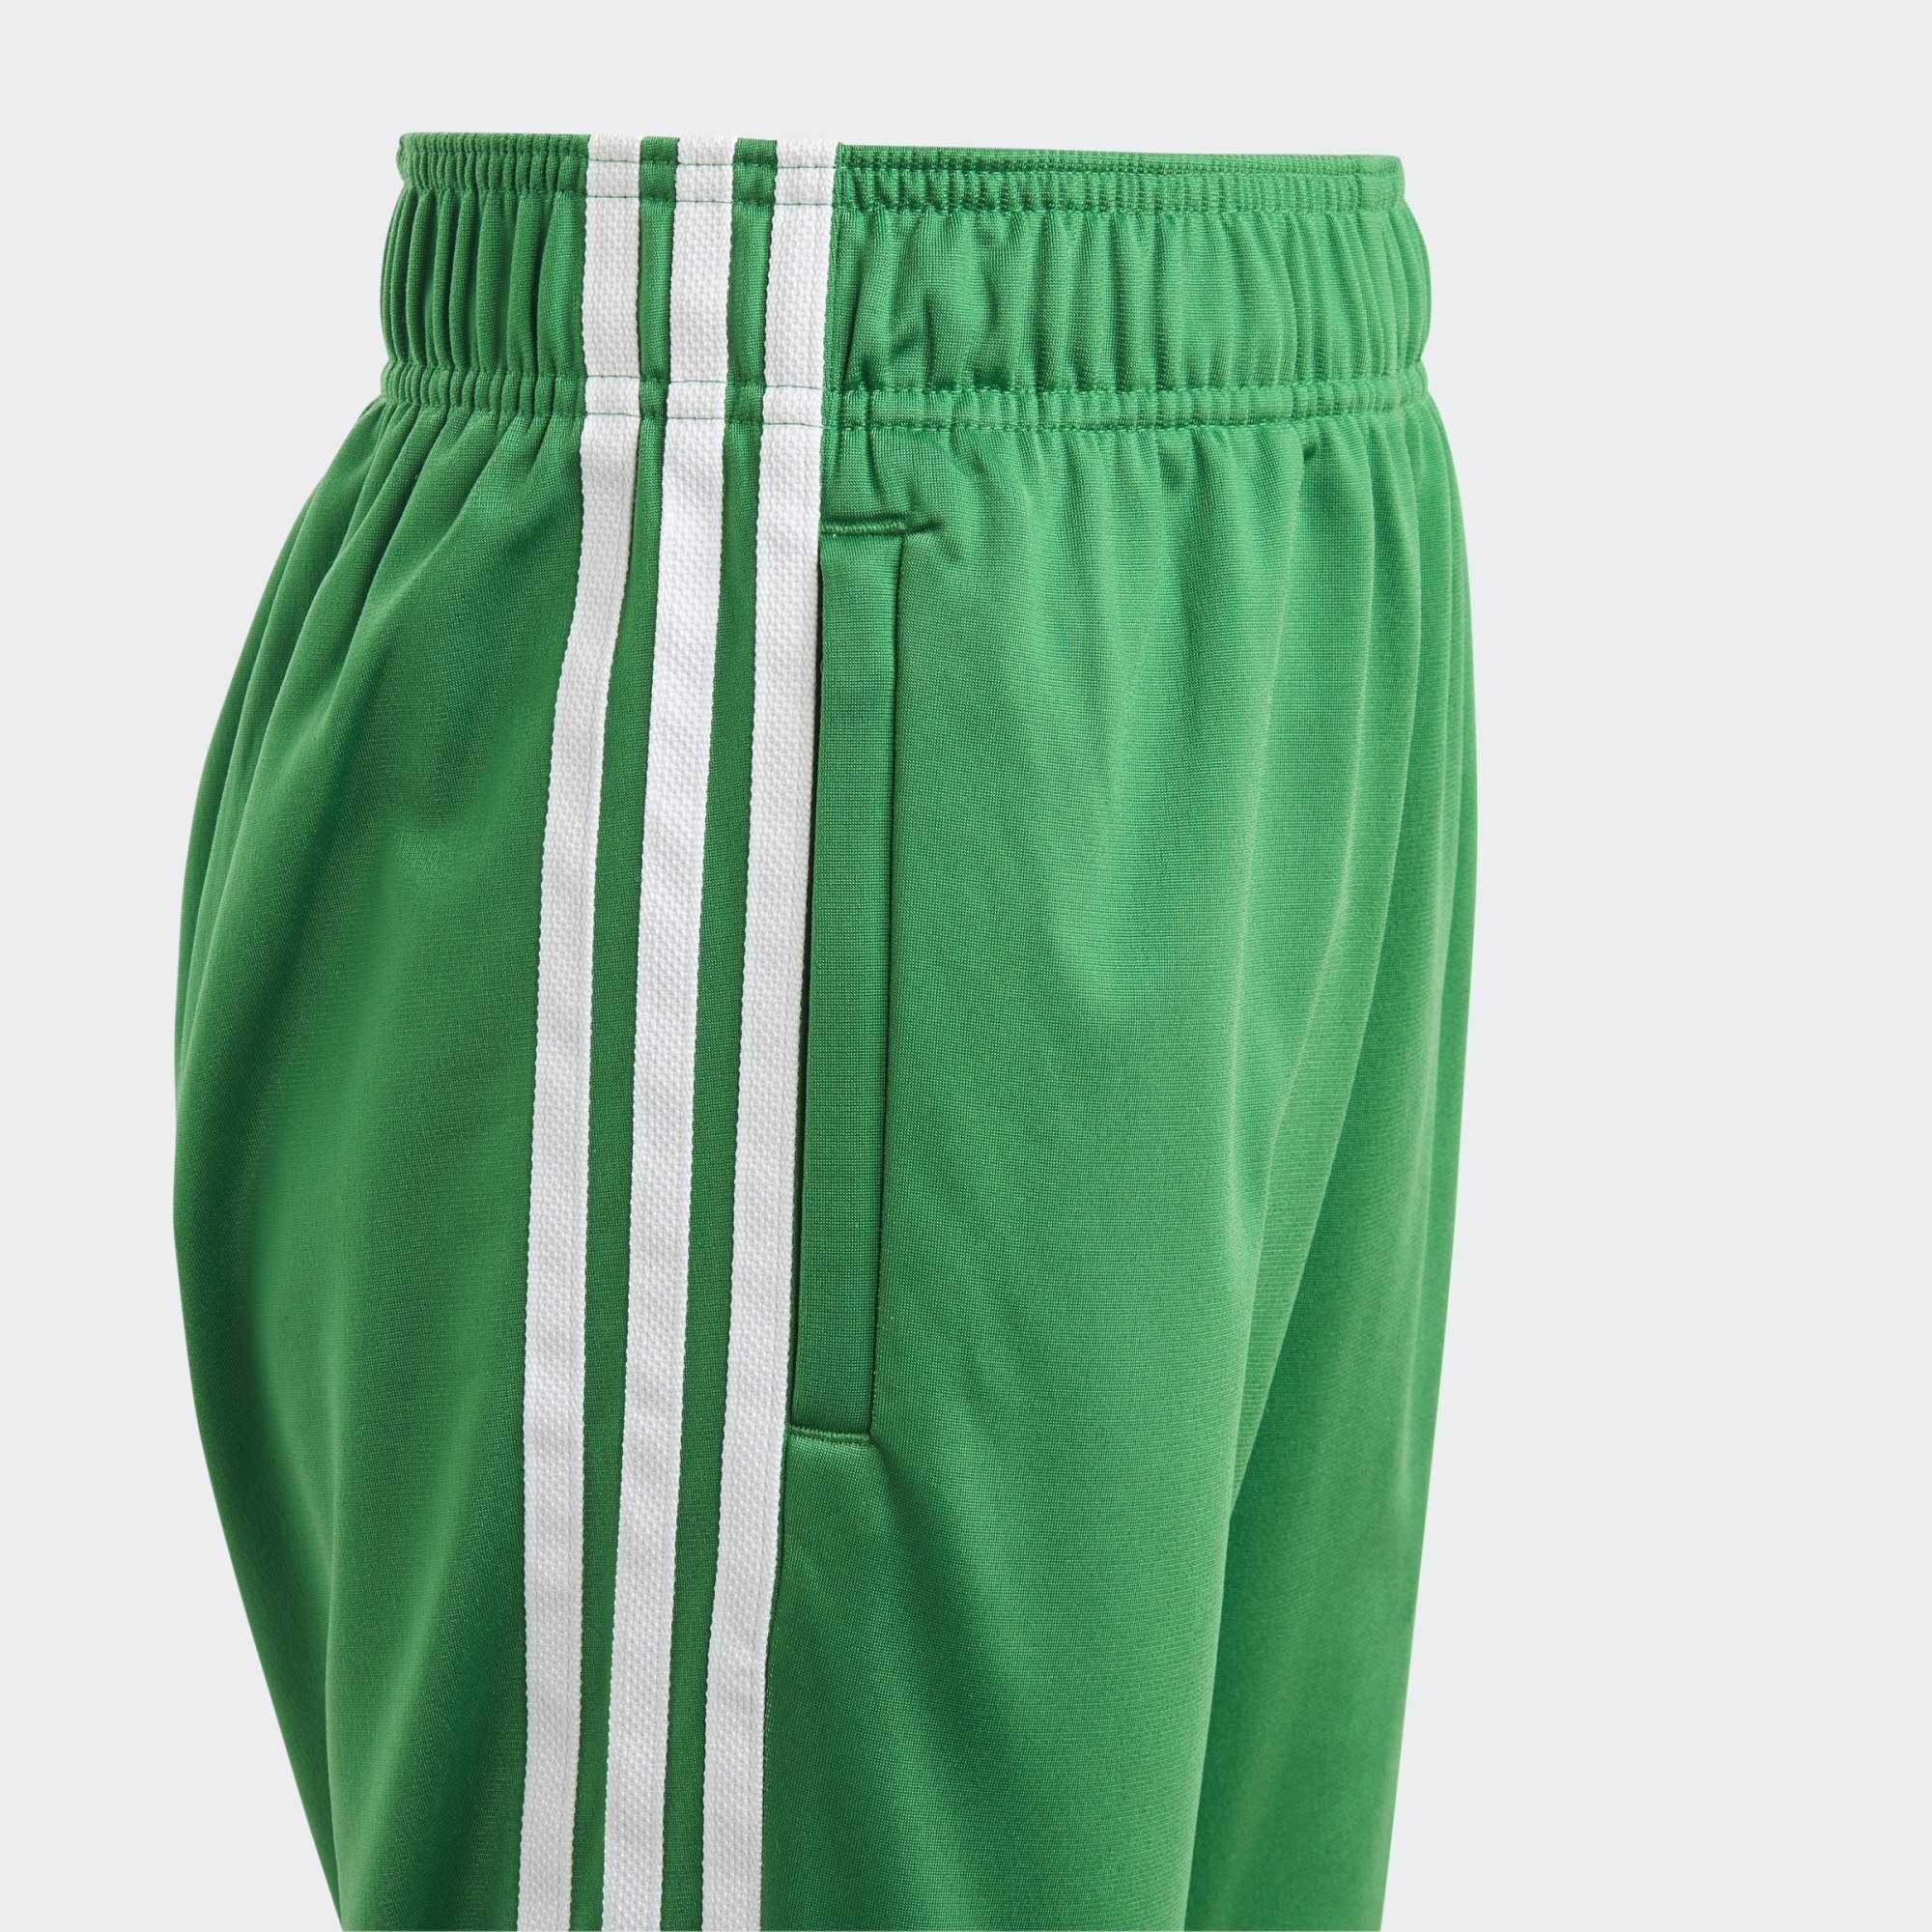 ADICOLOR adidas SST Originals Leichtathletik-Hose Green TRAININGSHOSE